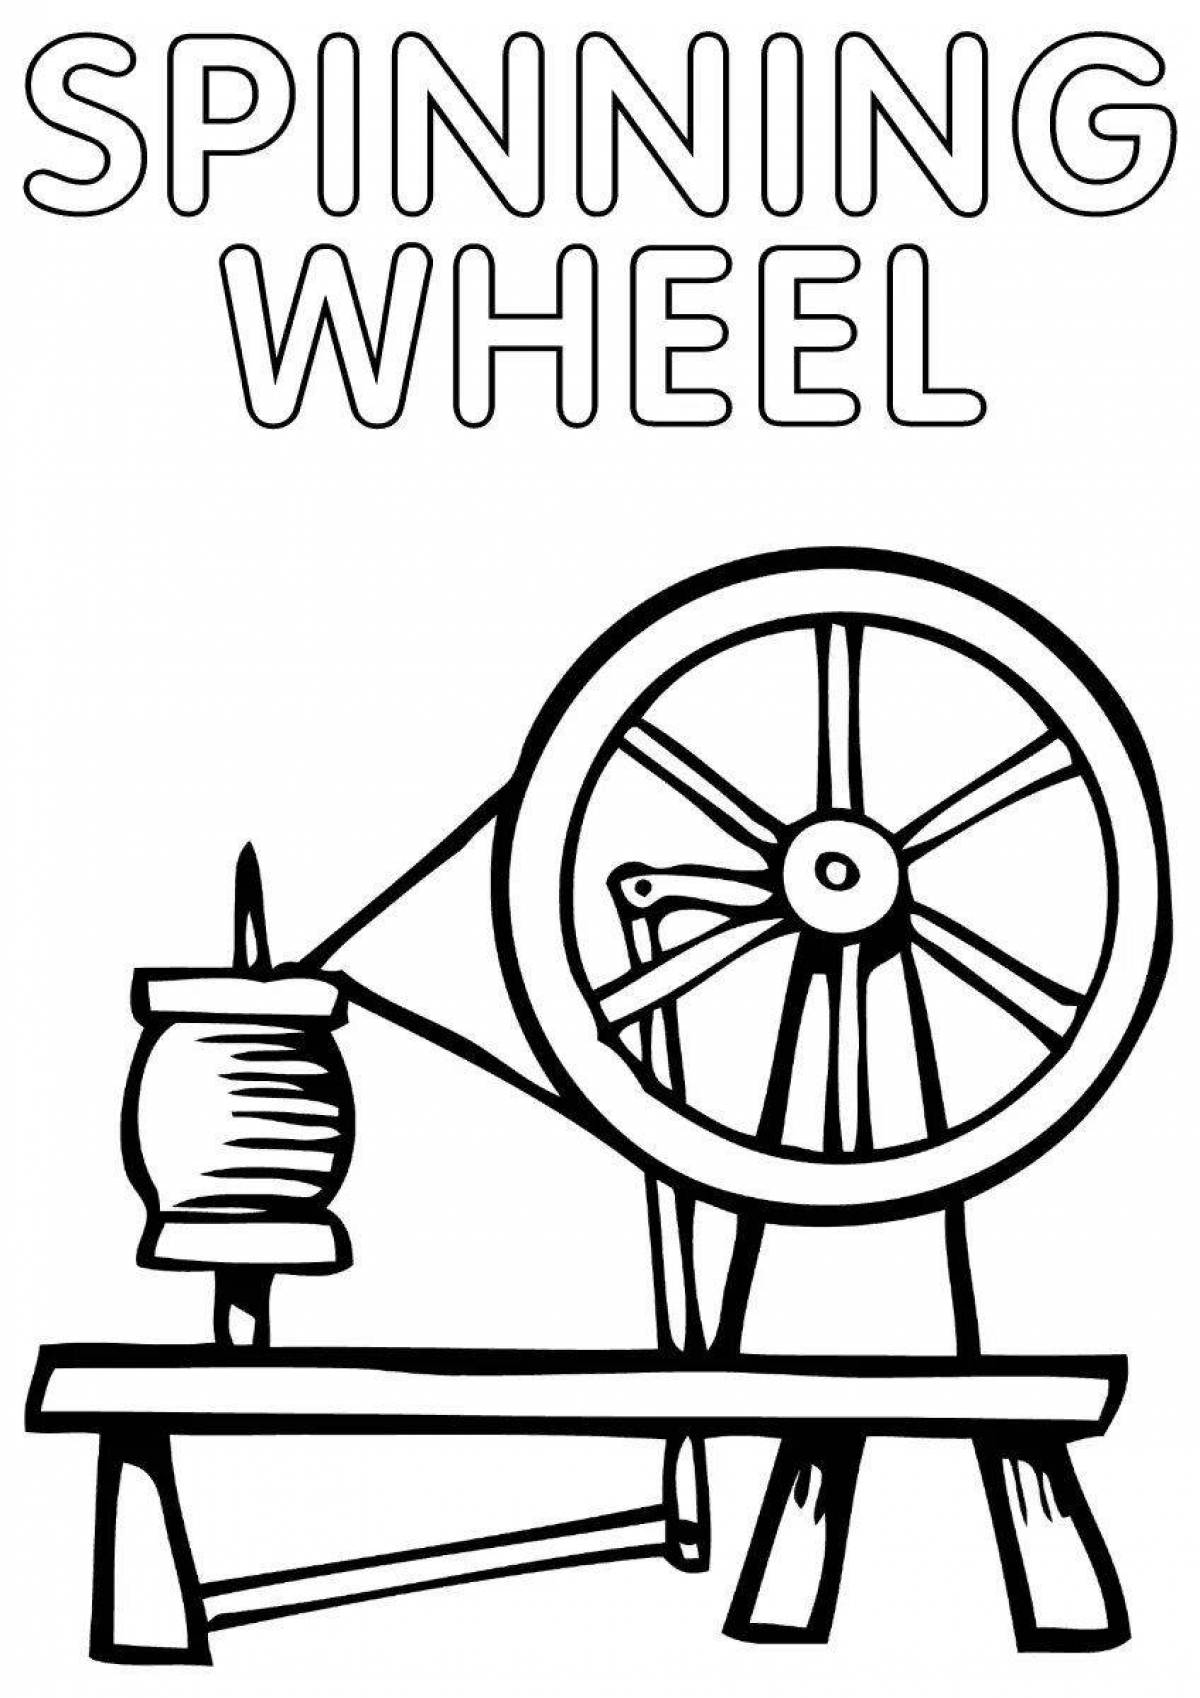 Spinning wheel #1